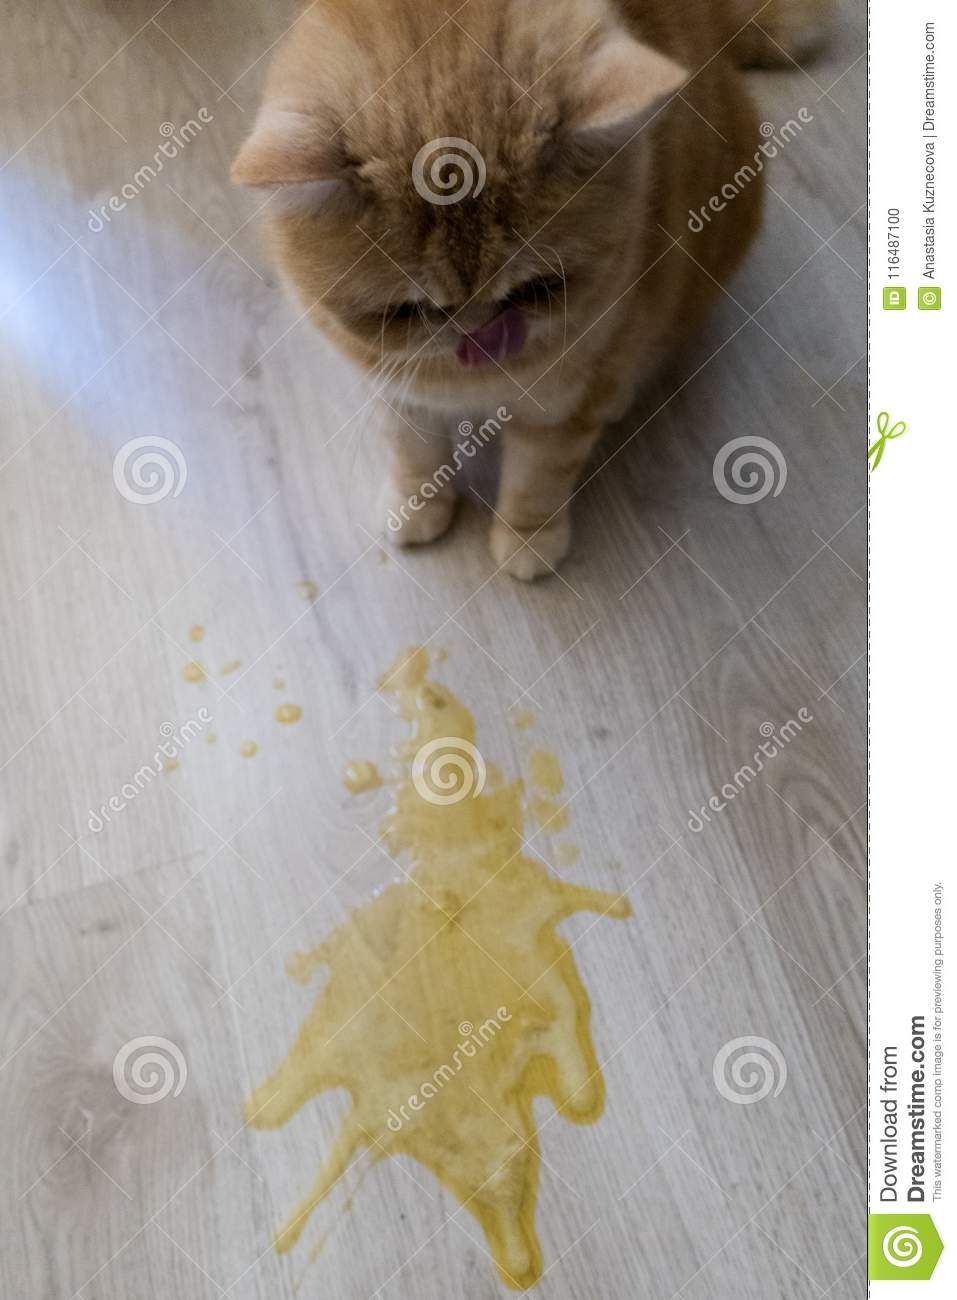 Кошка рыгает жидкостью. Кот рыгнул желтой жидкостью. Тошнит желтой жидкостью. Кота стошнило желтой жидкостью.